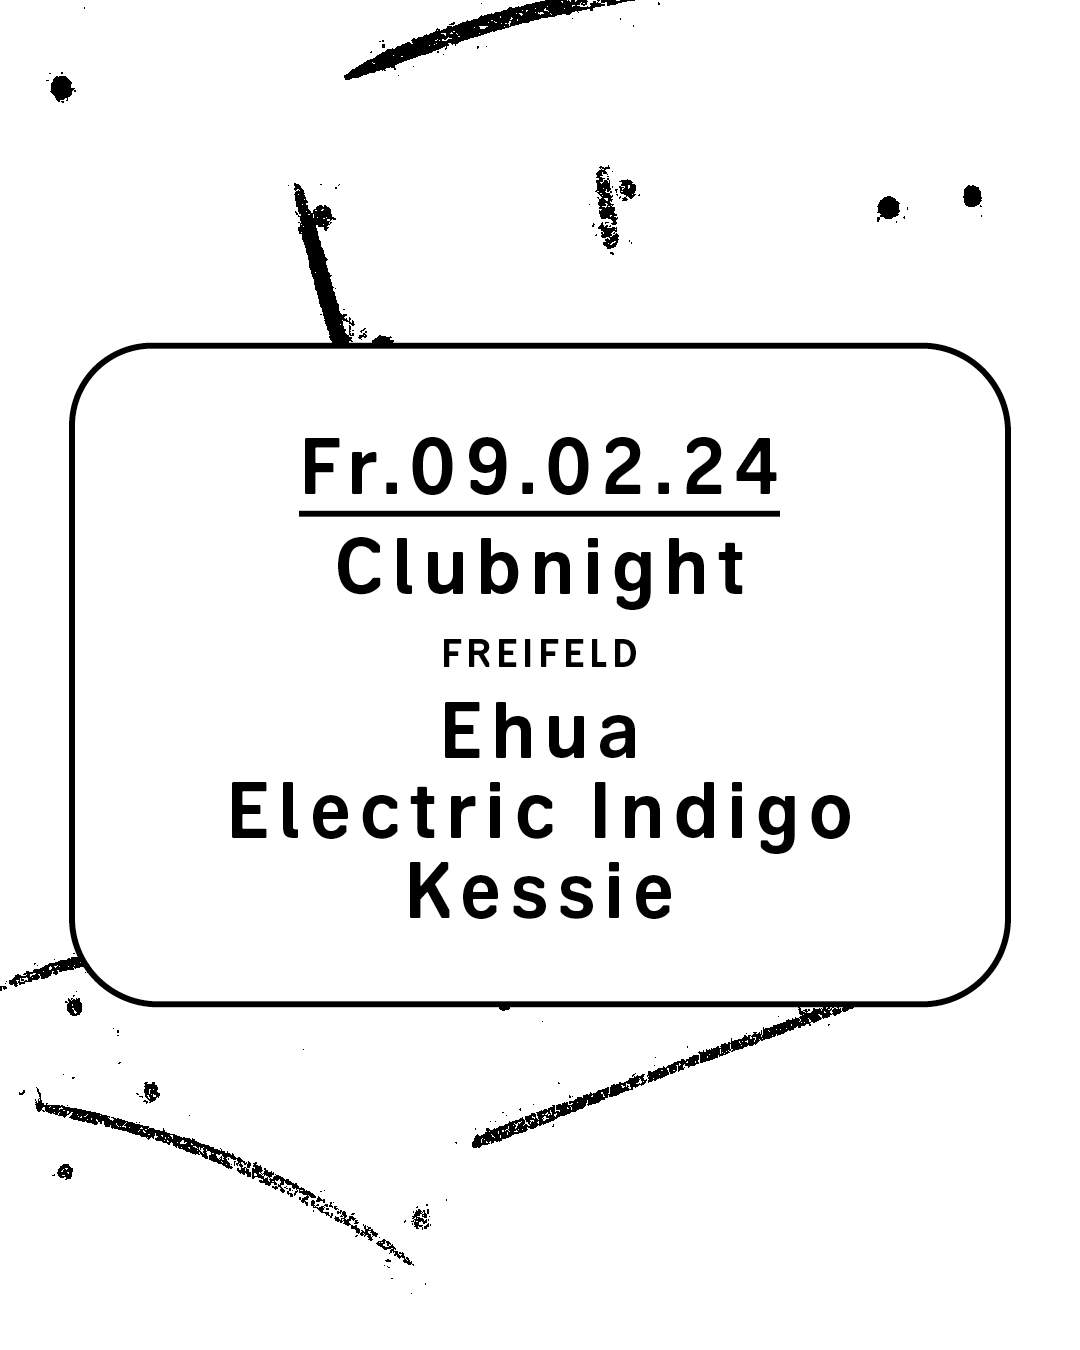 Clubnight - Ehua, Electric Indigo, Kessie - フライヤー裏